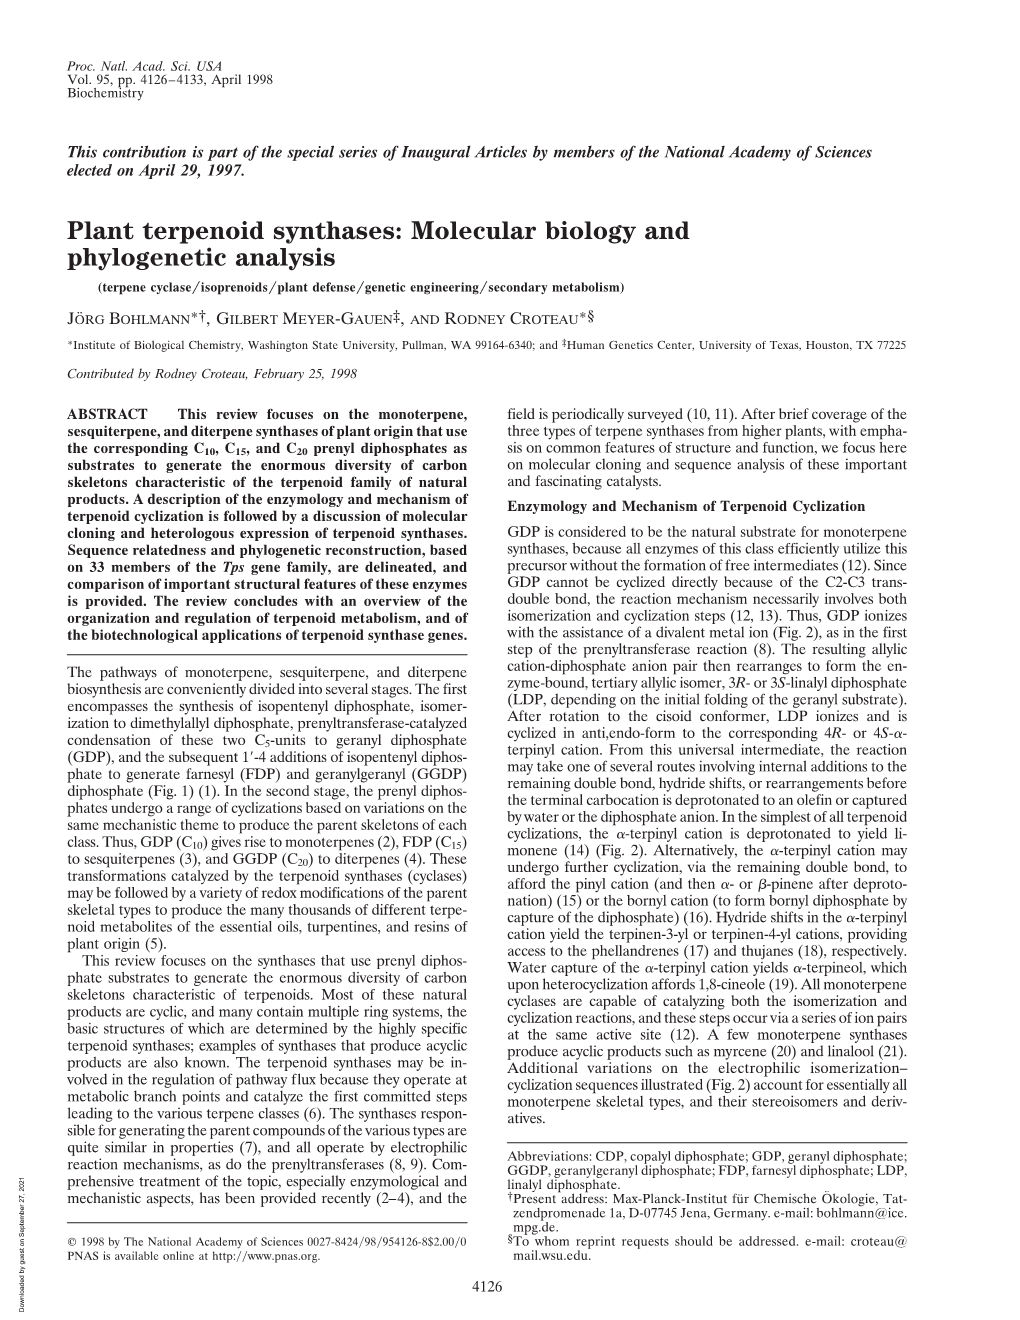 Plant Terpenoid Synthases: Molecular Biology and Phylogenetic Analysis (Terpene Cyclase͞isoprenoids͞plant Defense͞genetic Engineering͞secondary Metabolism)